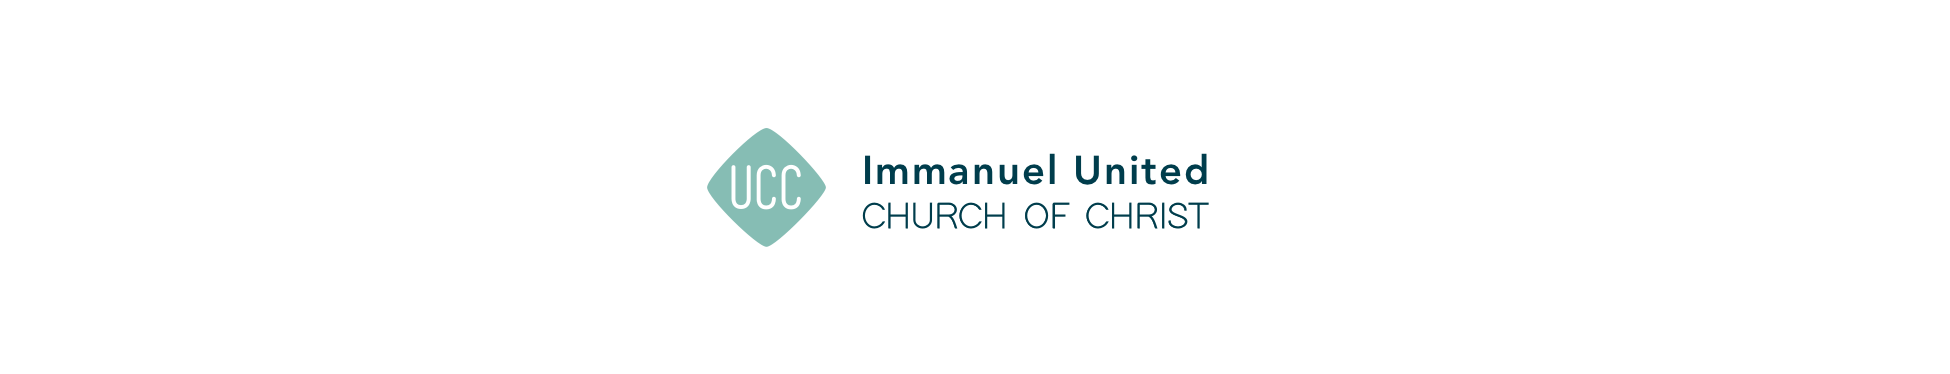 Immanuel UCC Logo